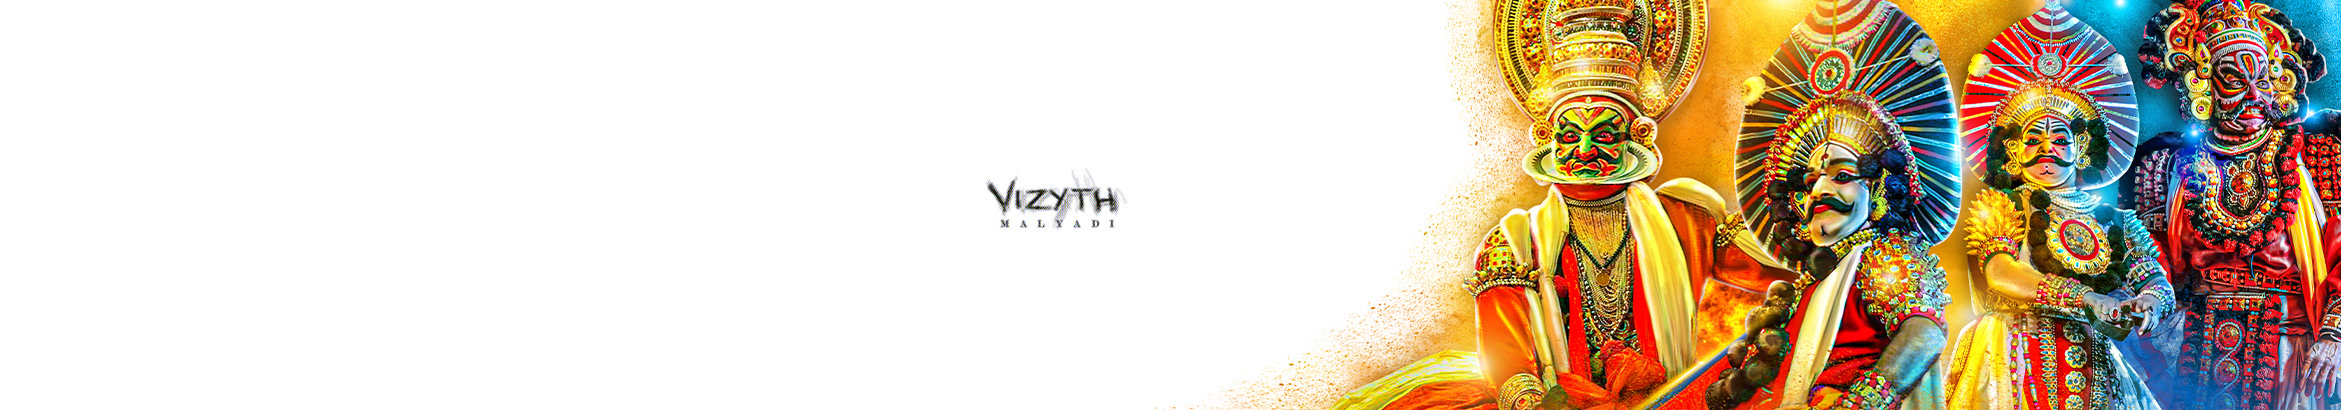 Vizyth Malyadis profilbanner